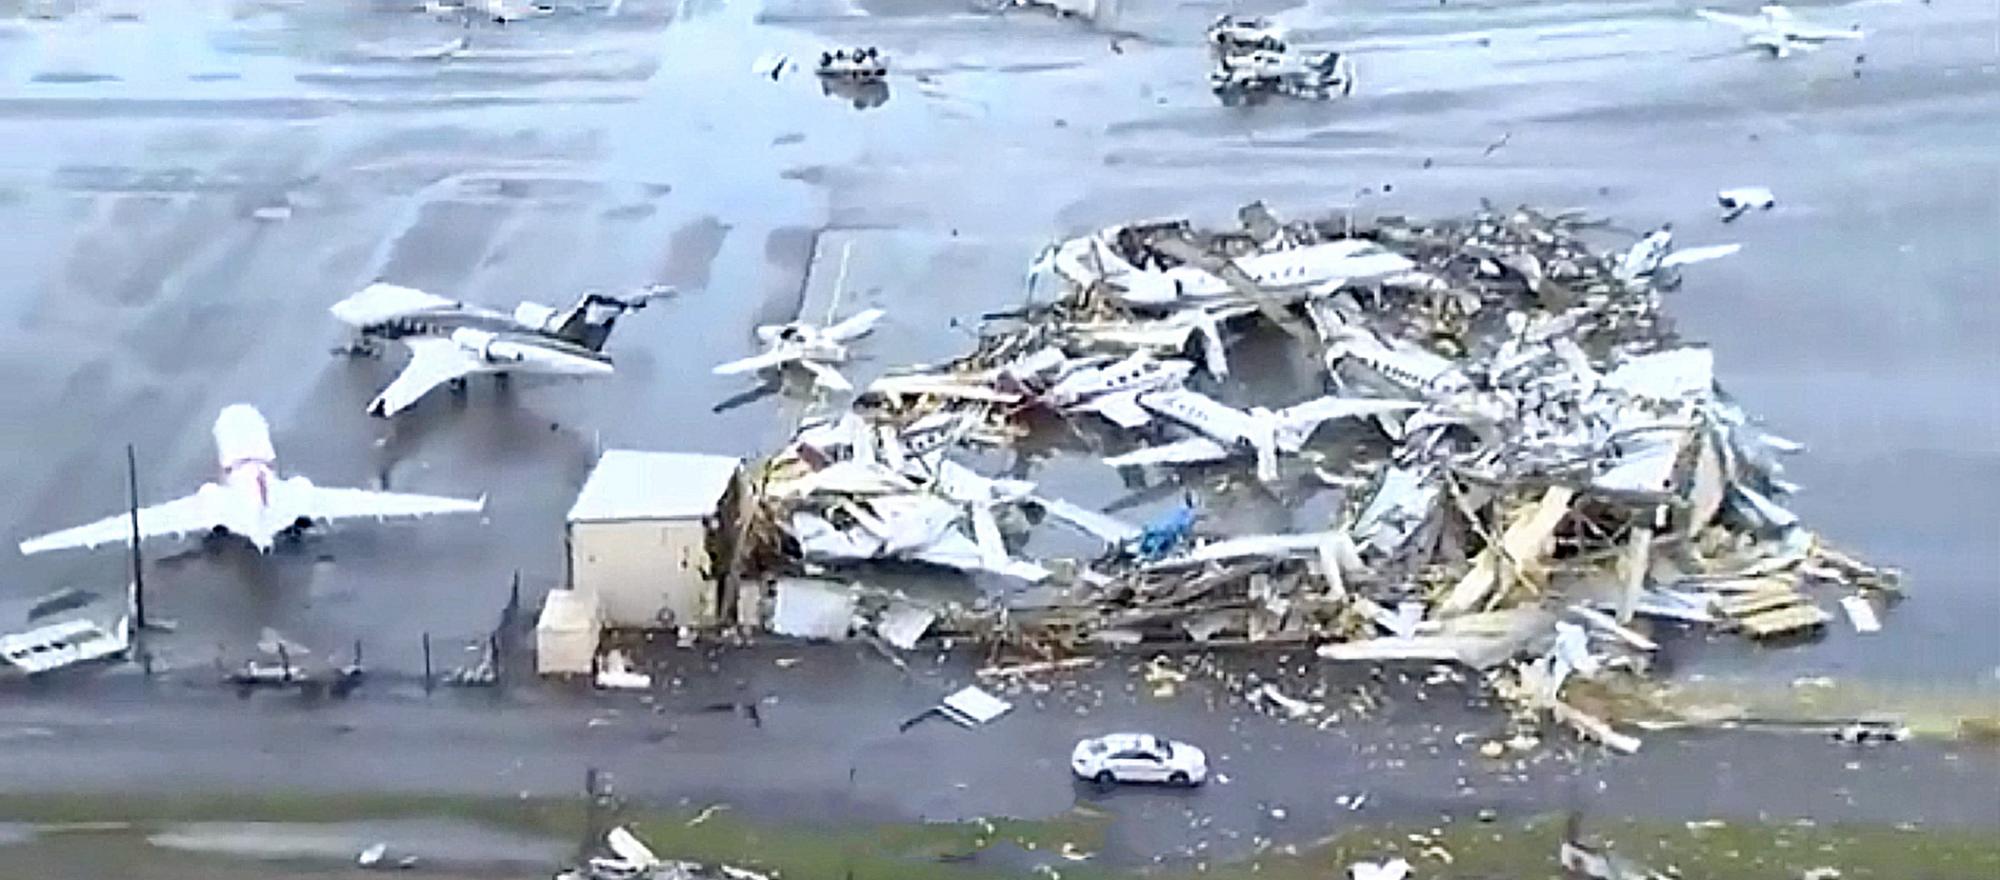 Nashville airport tornado damage